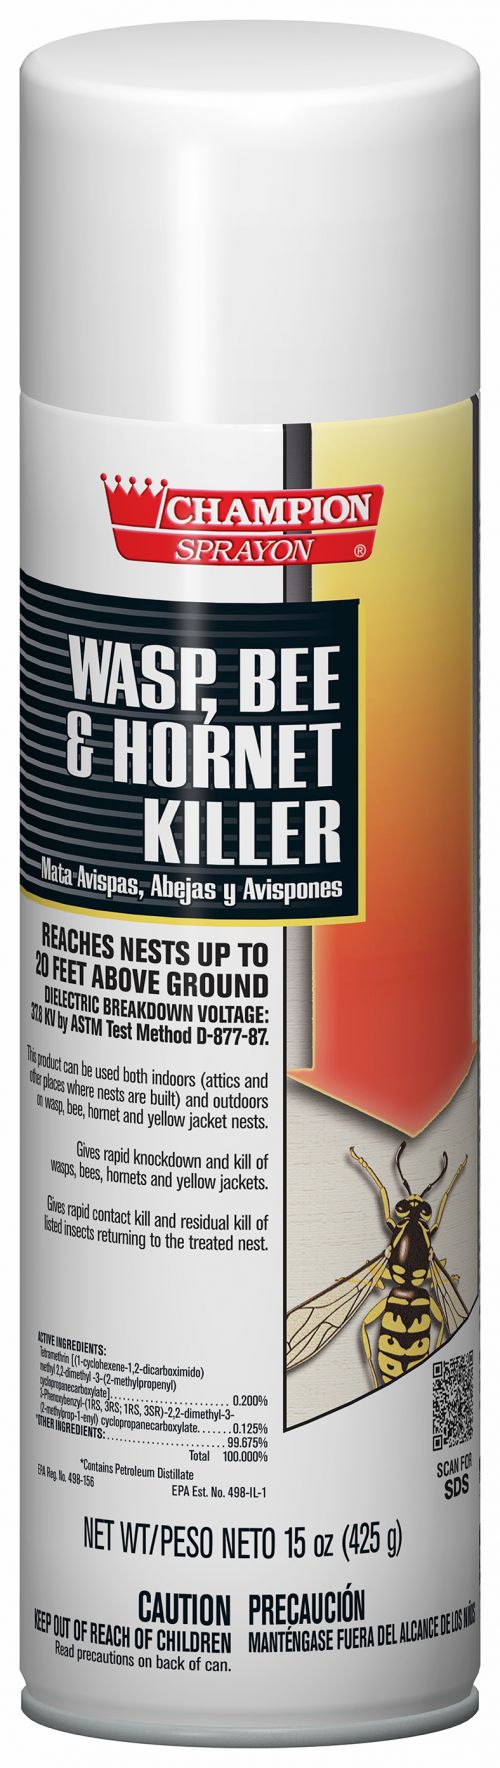 Chase Aerosol Wasp Bee & Hornet killer Pack 12/15oz